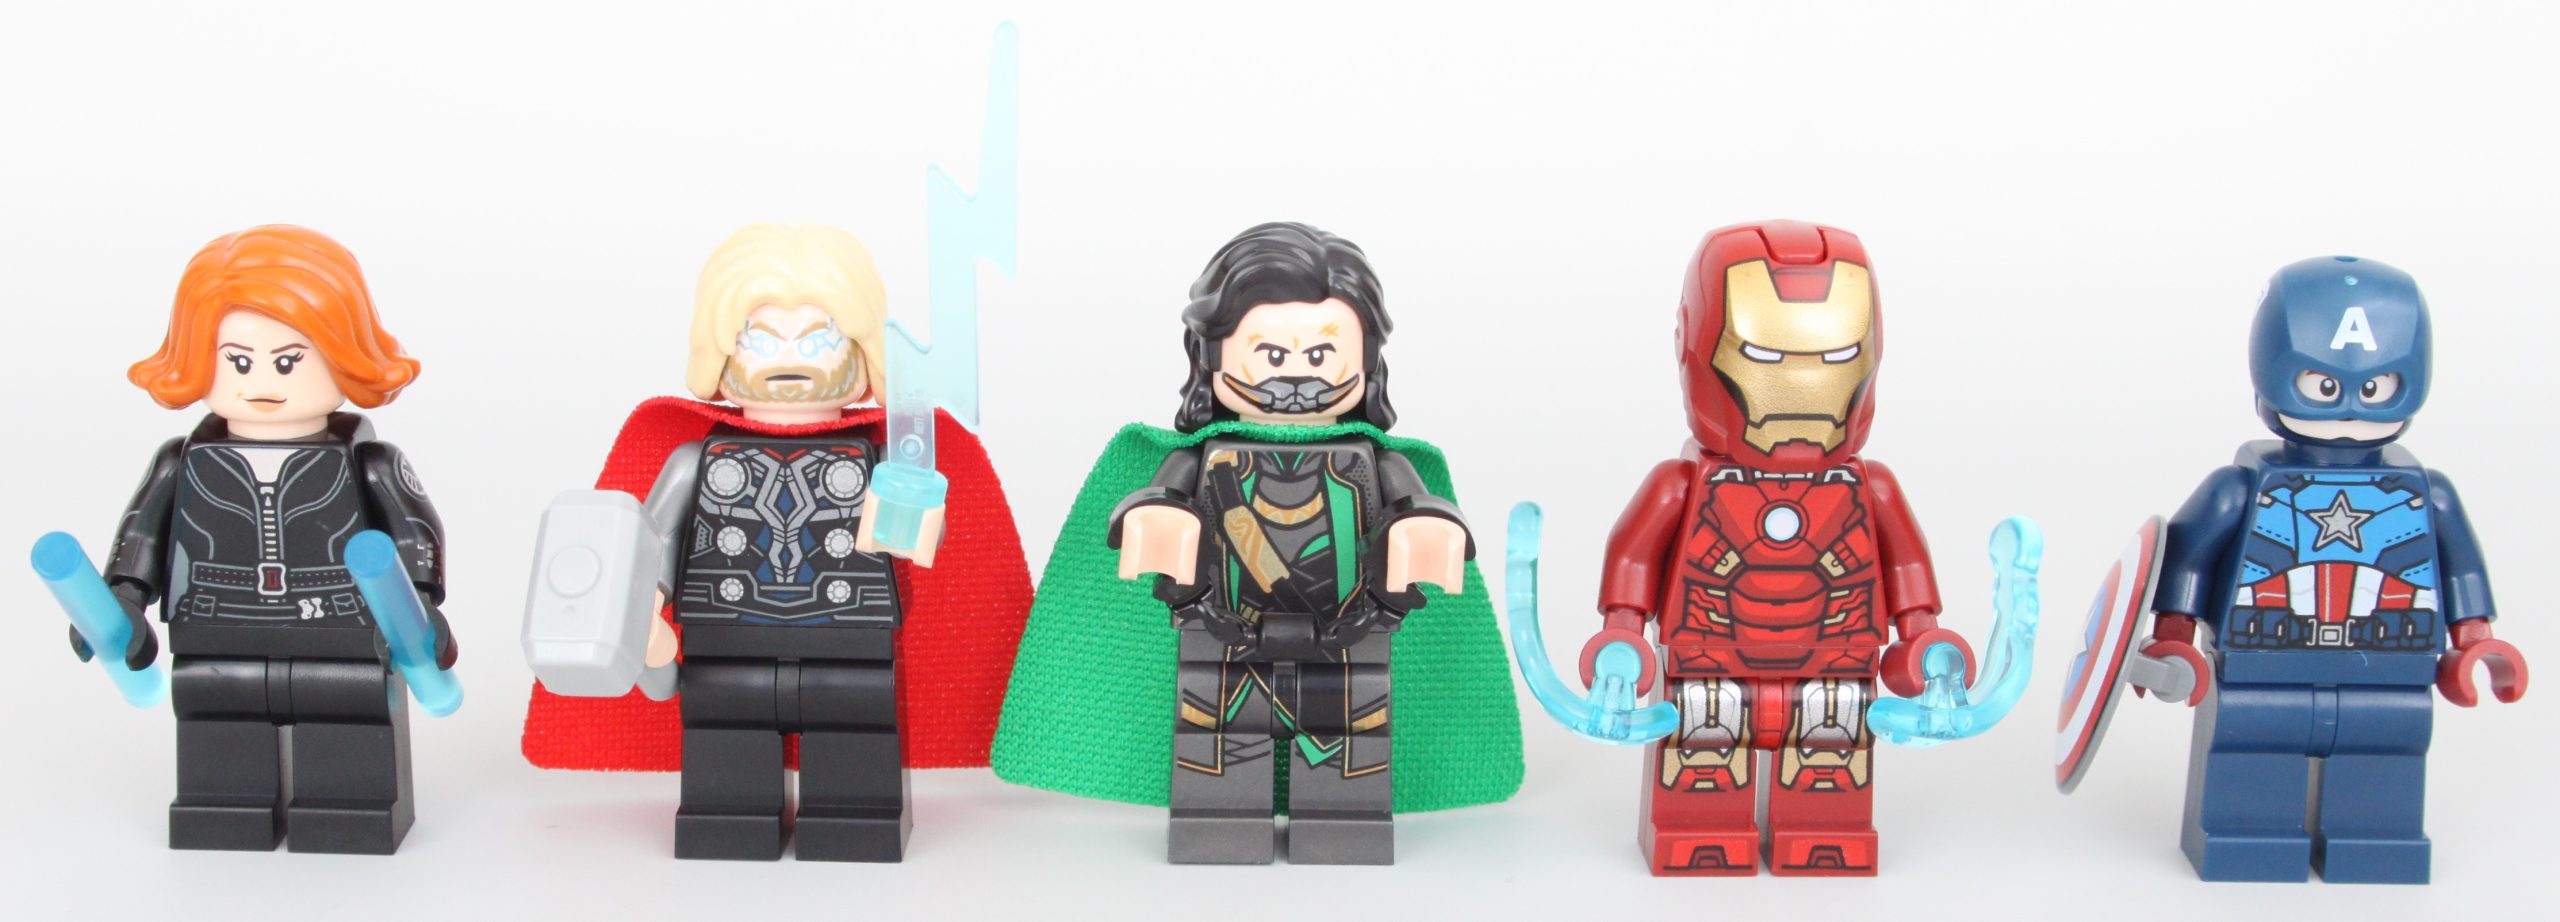 LEGO Marvel Super Heroes The Avengers Quinjet 76248